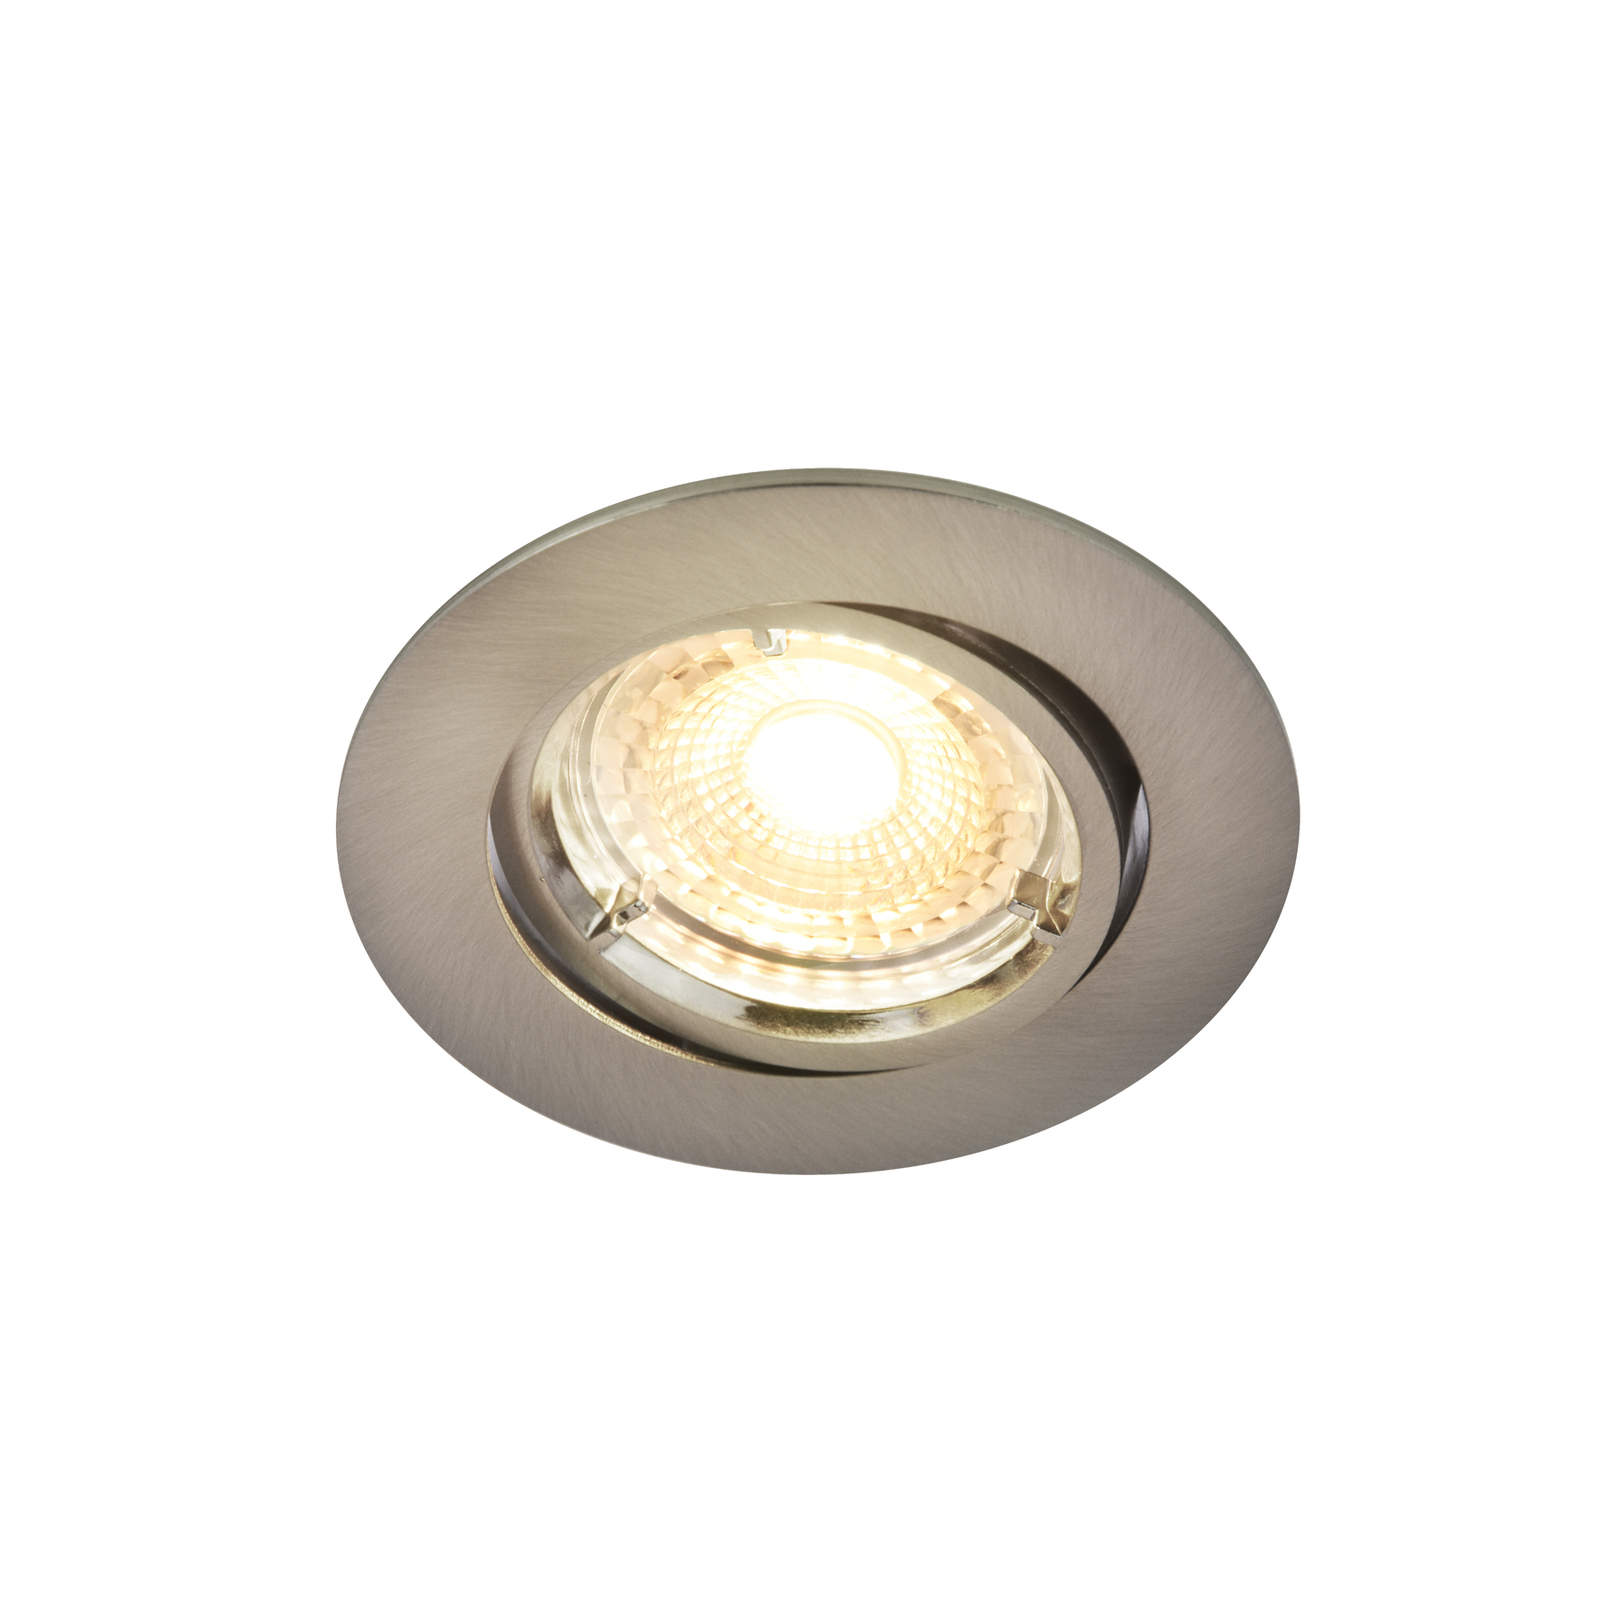 Carina Smart LED downlight, set of 3, round nickel